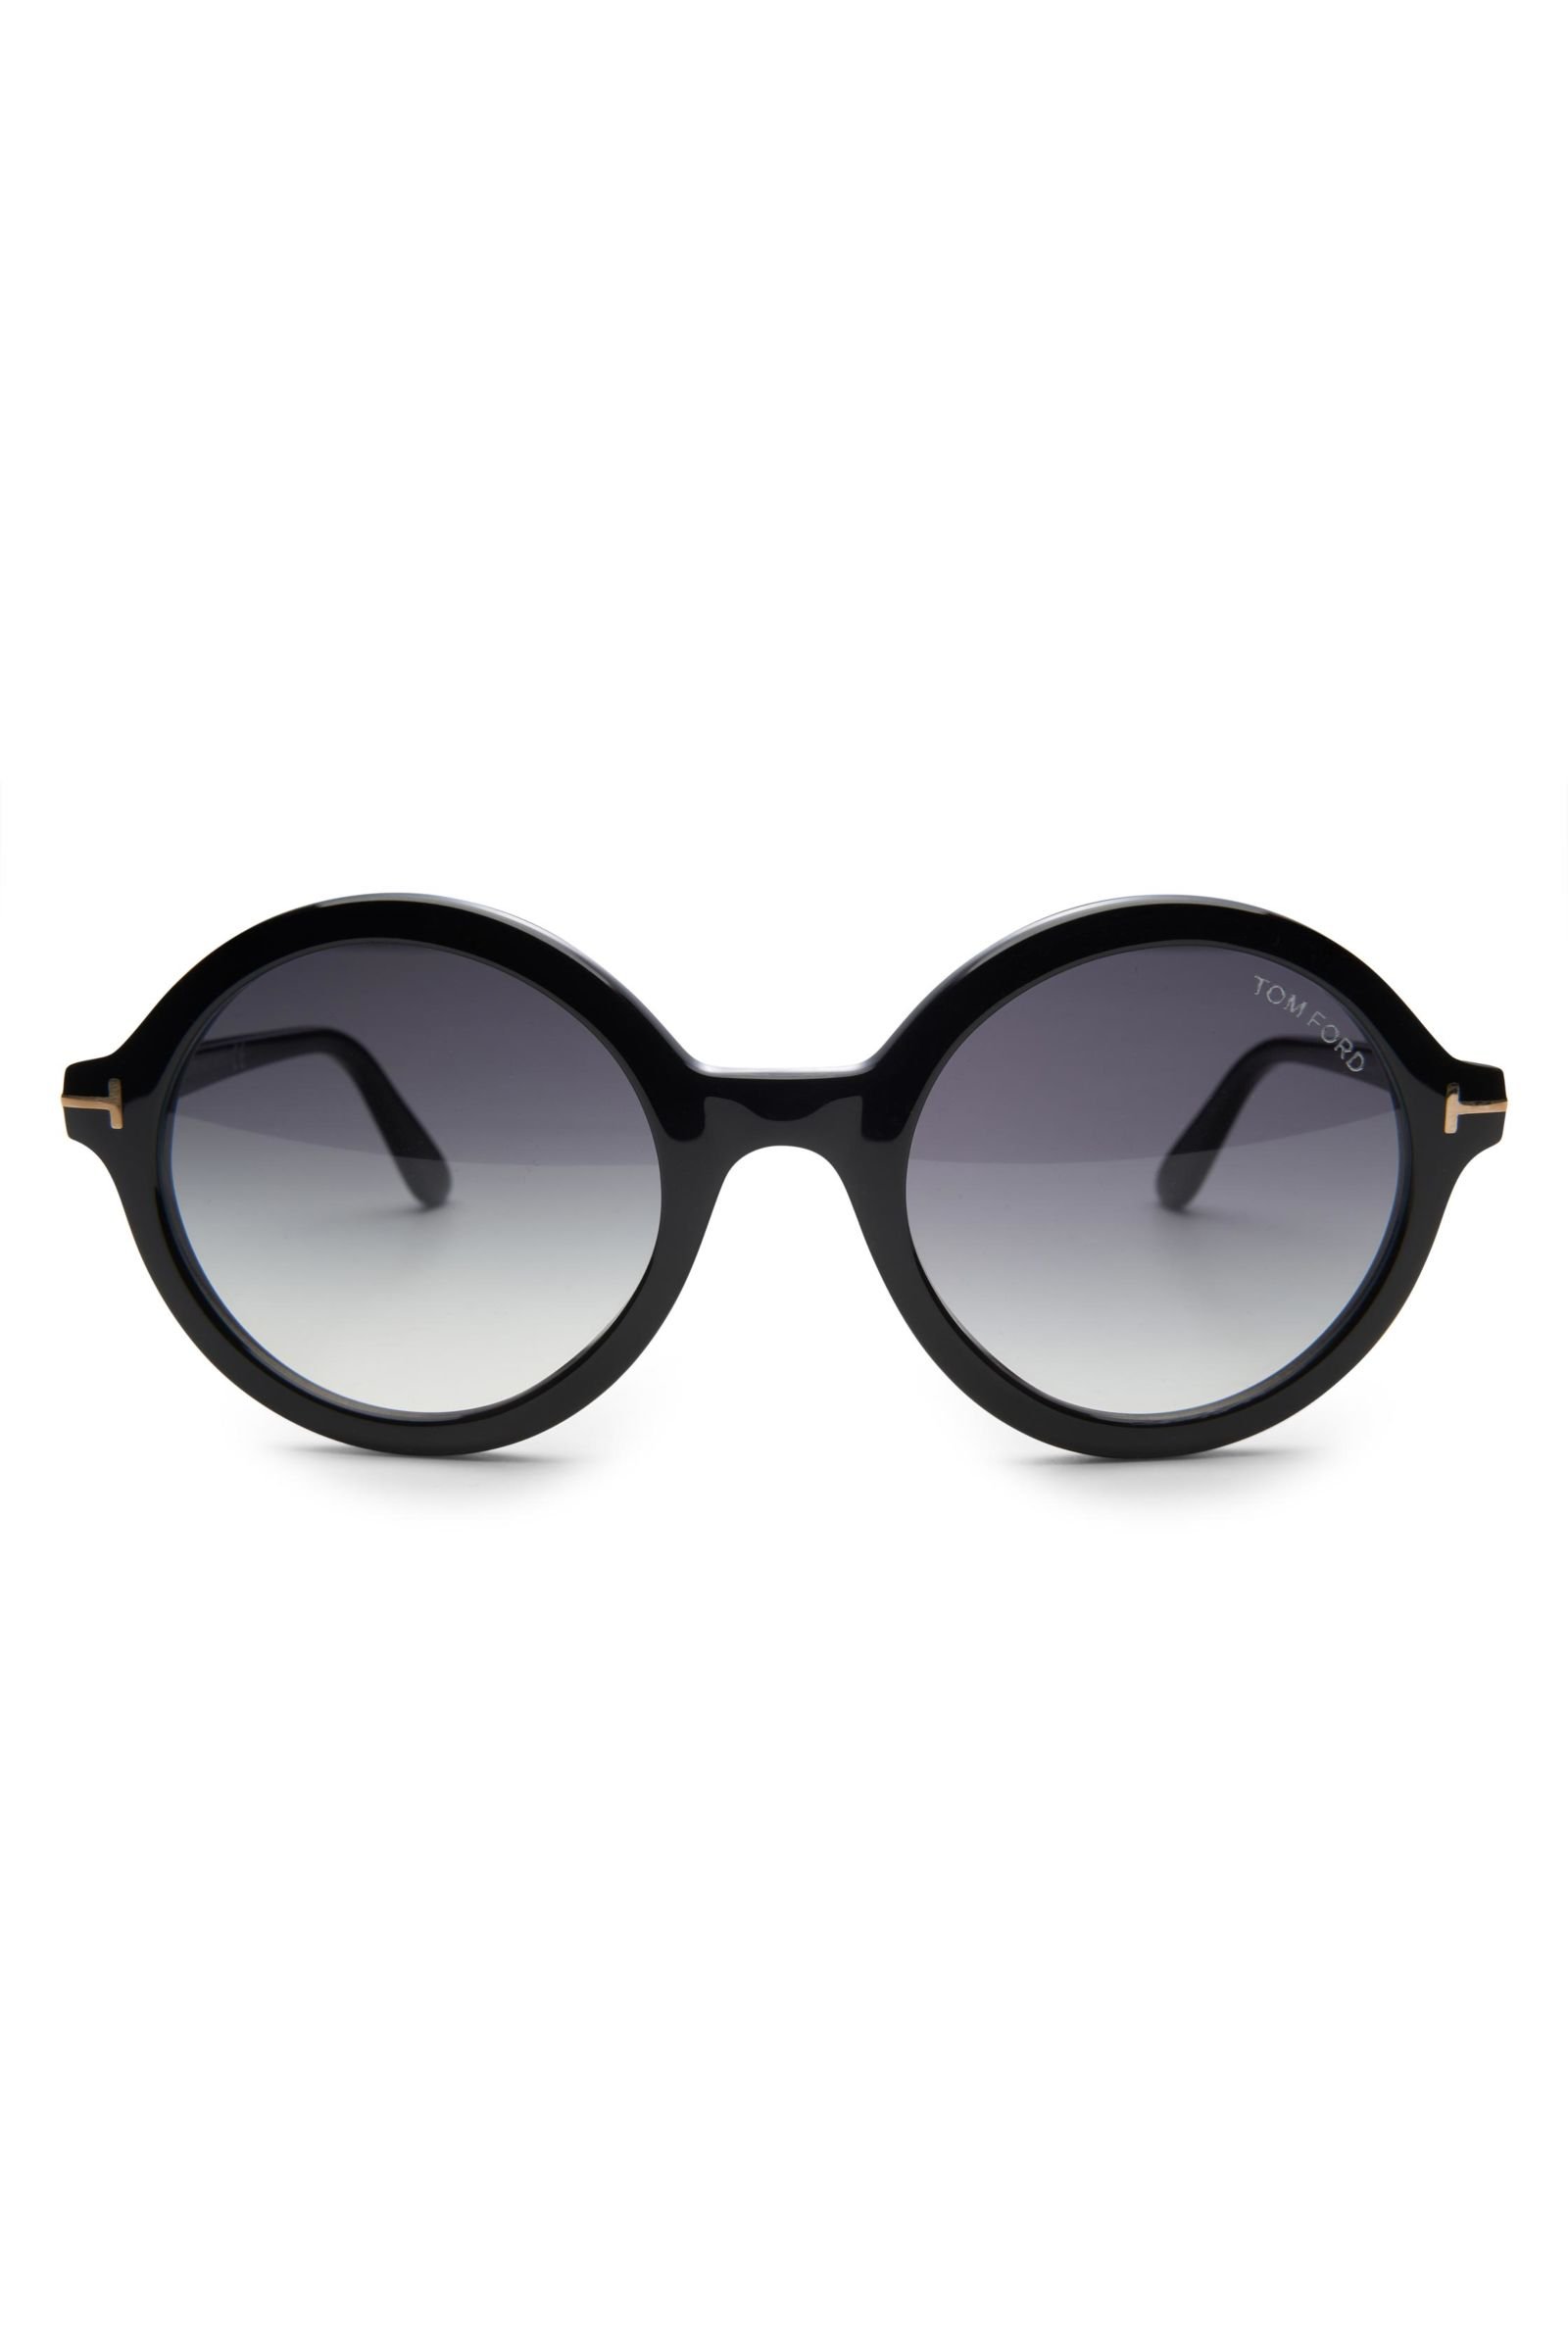 Sunglasses 'Nicolette' black/grey